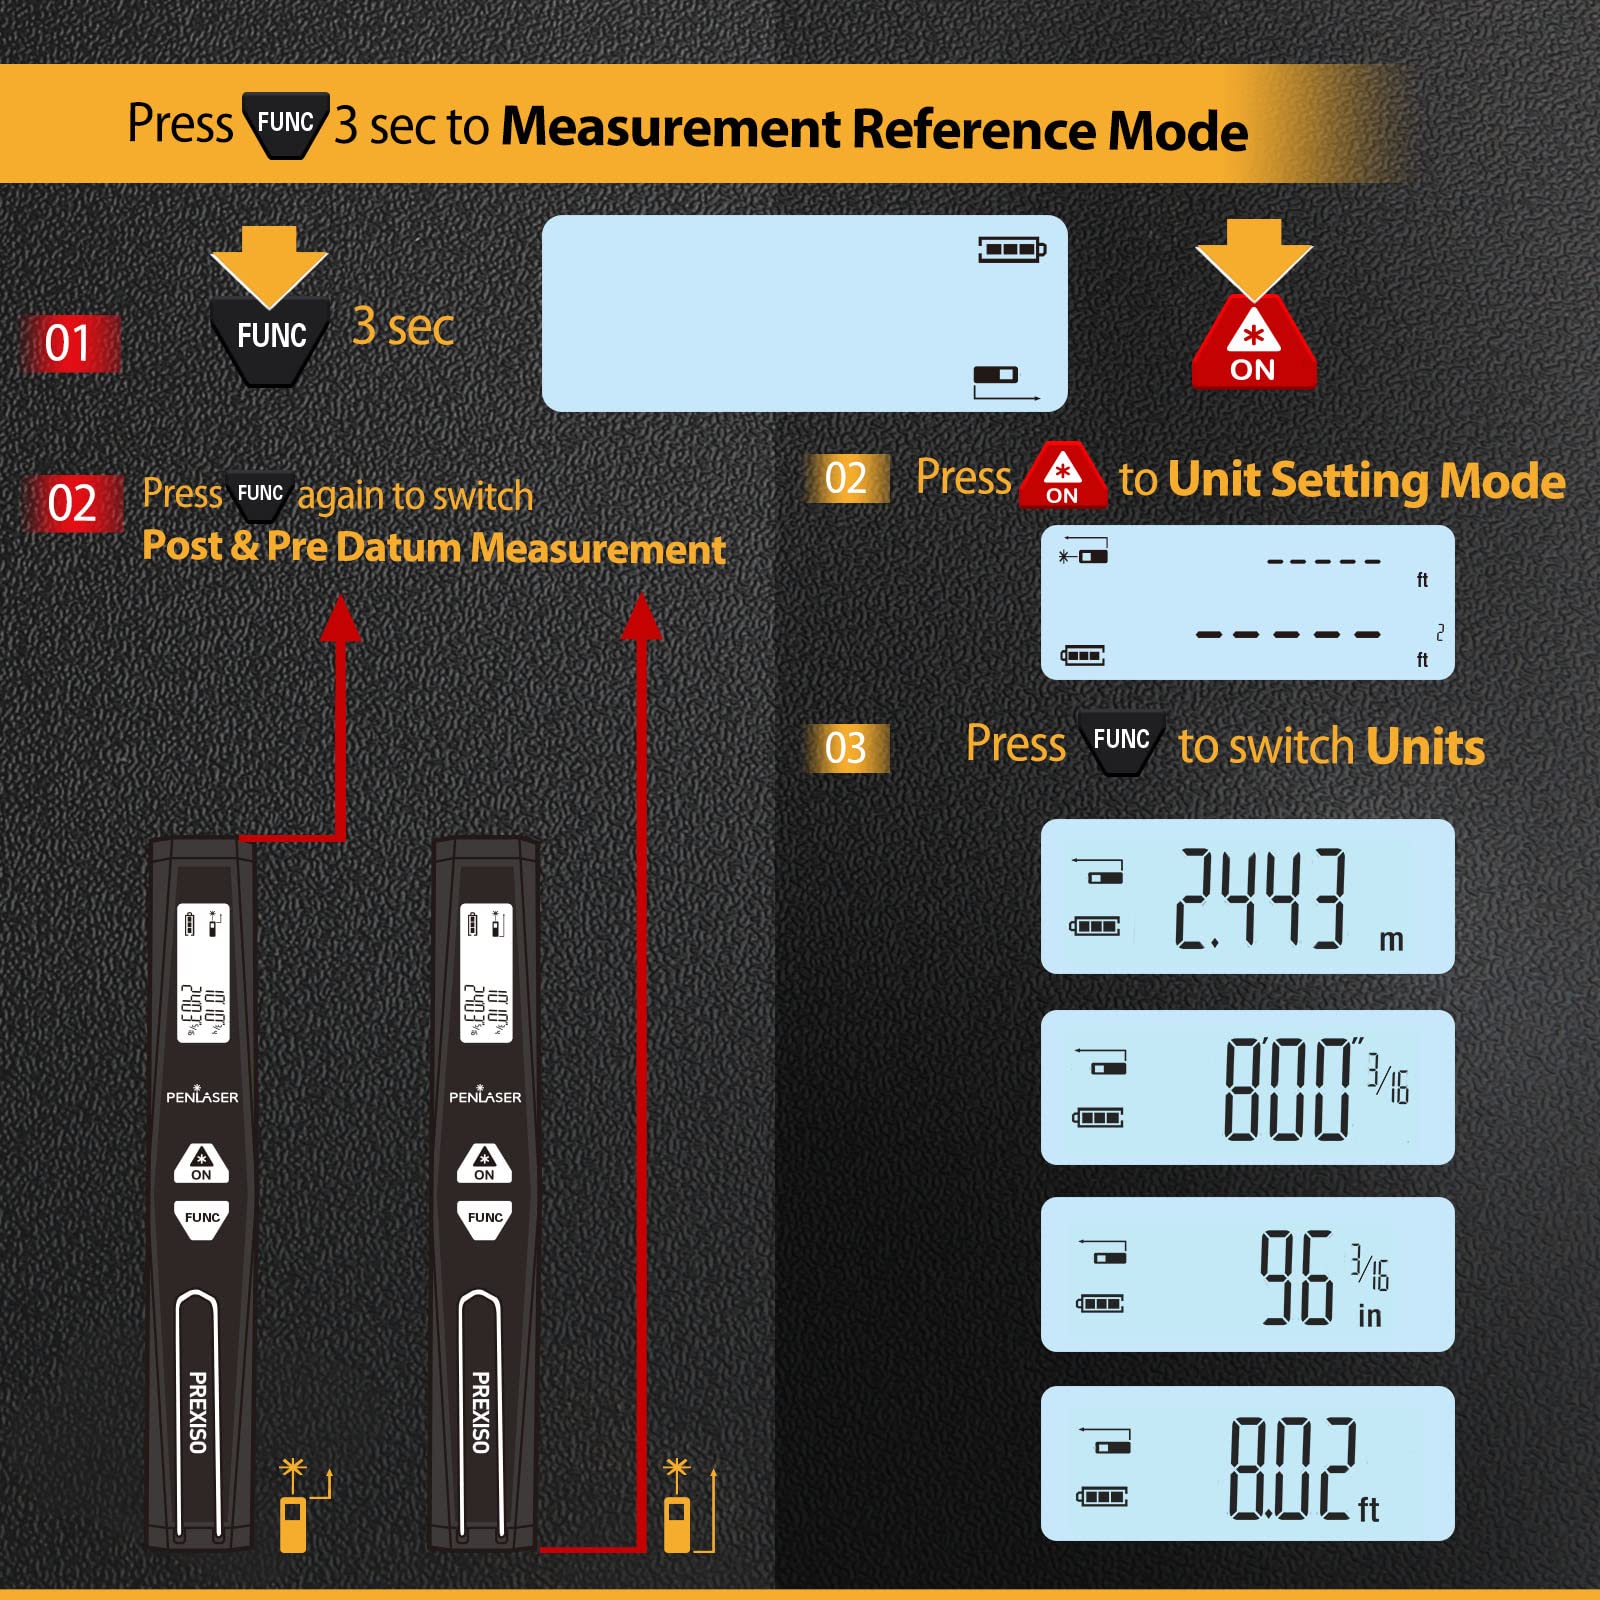 PREXISO Pocket Laser Measurement Tool, 135Ft Laser Distance Meter Backlit Display Laser Measure with Pen Clip Ft/Ft+in/in/M Unit - Pythagorean, Distance, Area, Volume Modes for Home, Industries